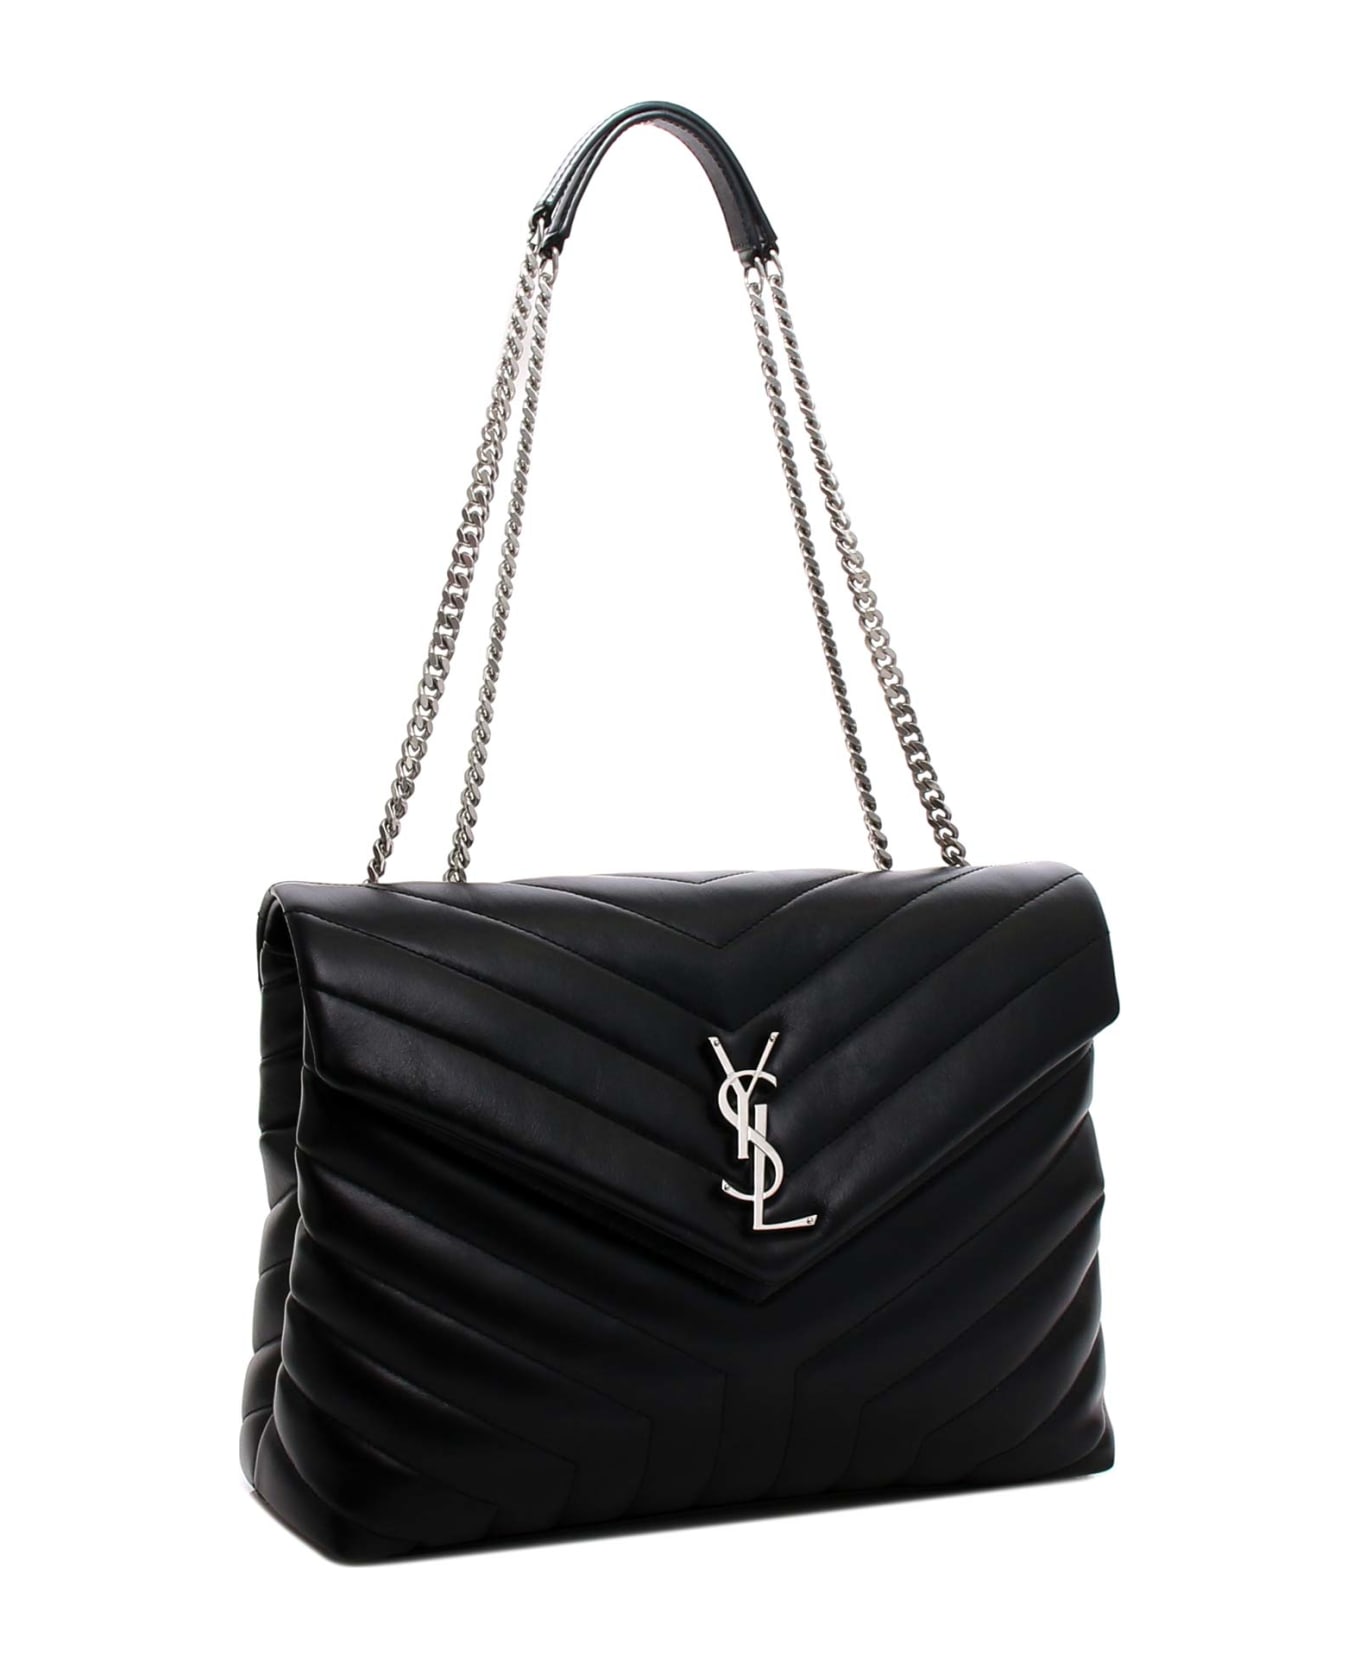 Saint Laurent Loulou Shoulder Bag - Black